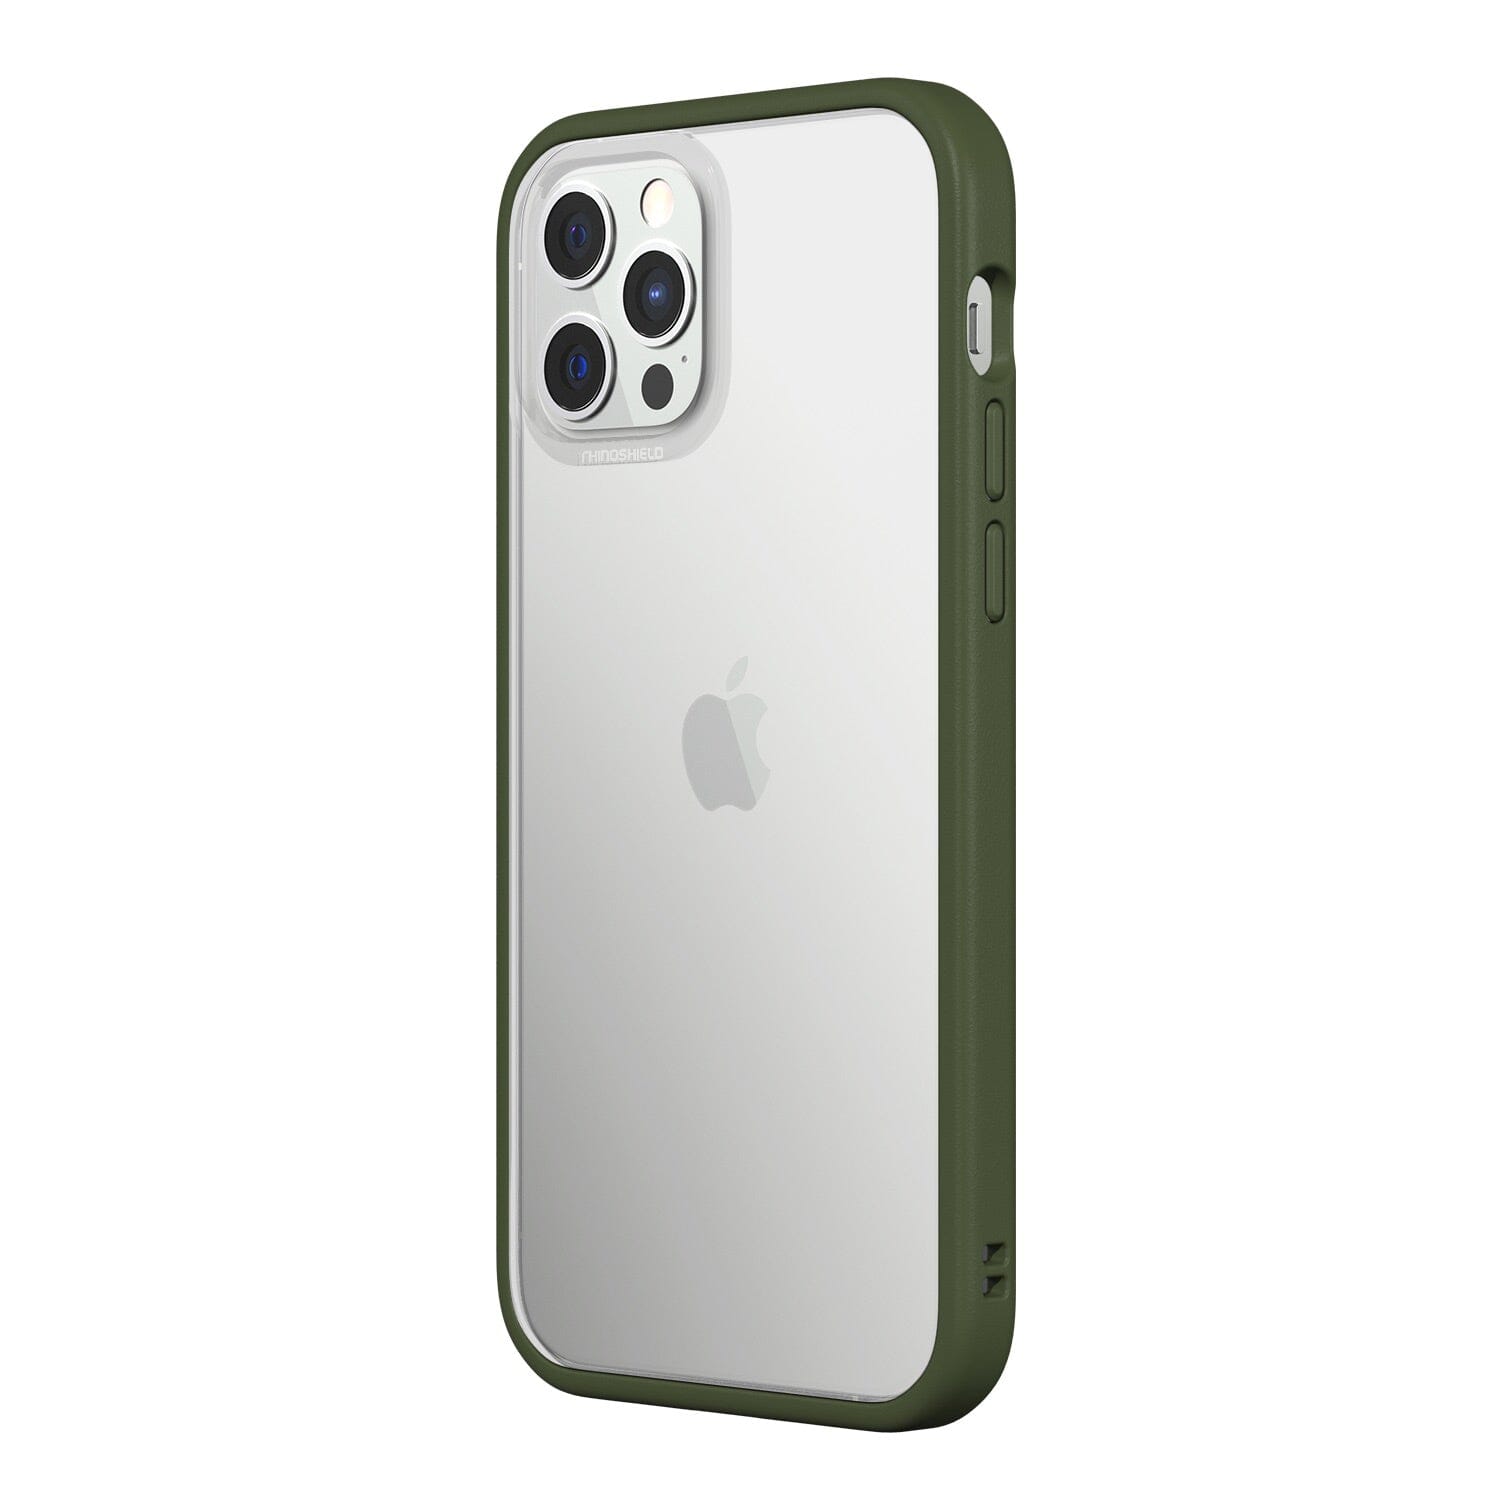 RhinoShield Mod NX Modular Case for iPhone 12 Series (2020) iPhone 12 Series RhinoShield iPhone 12/12 Pro 6.1" Camo Green 